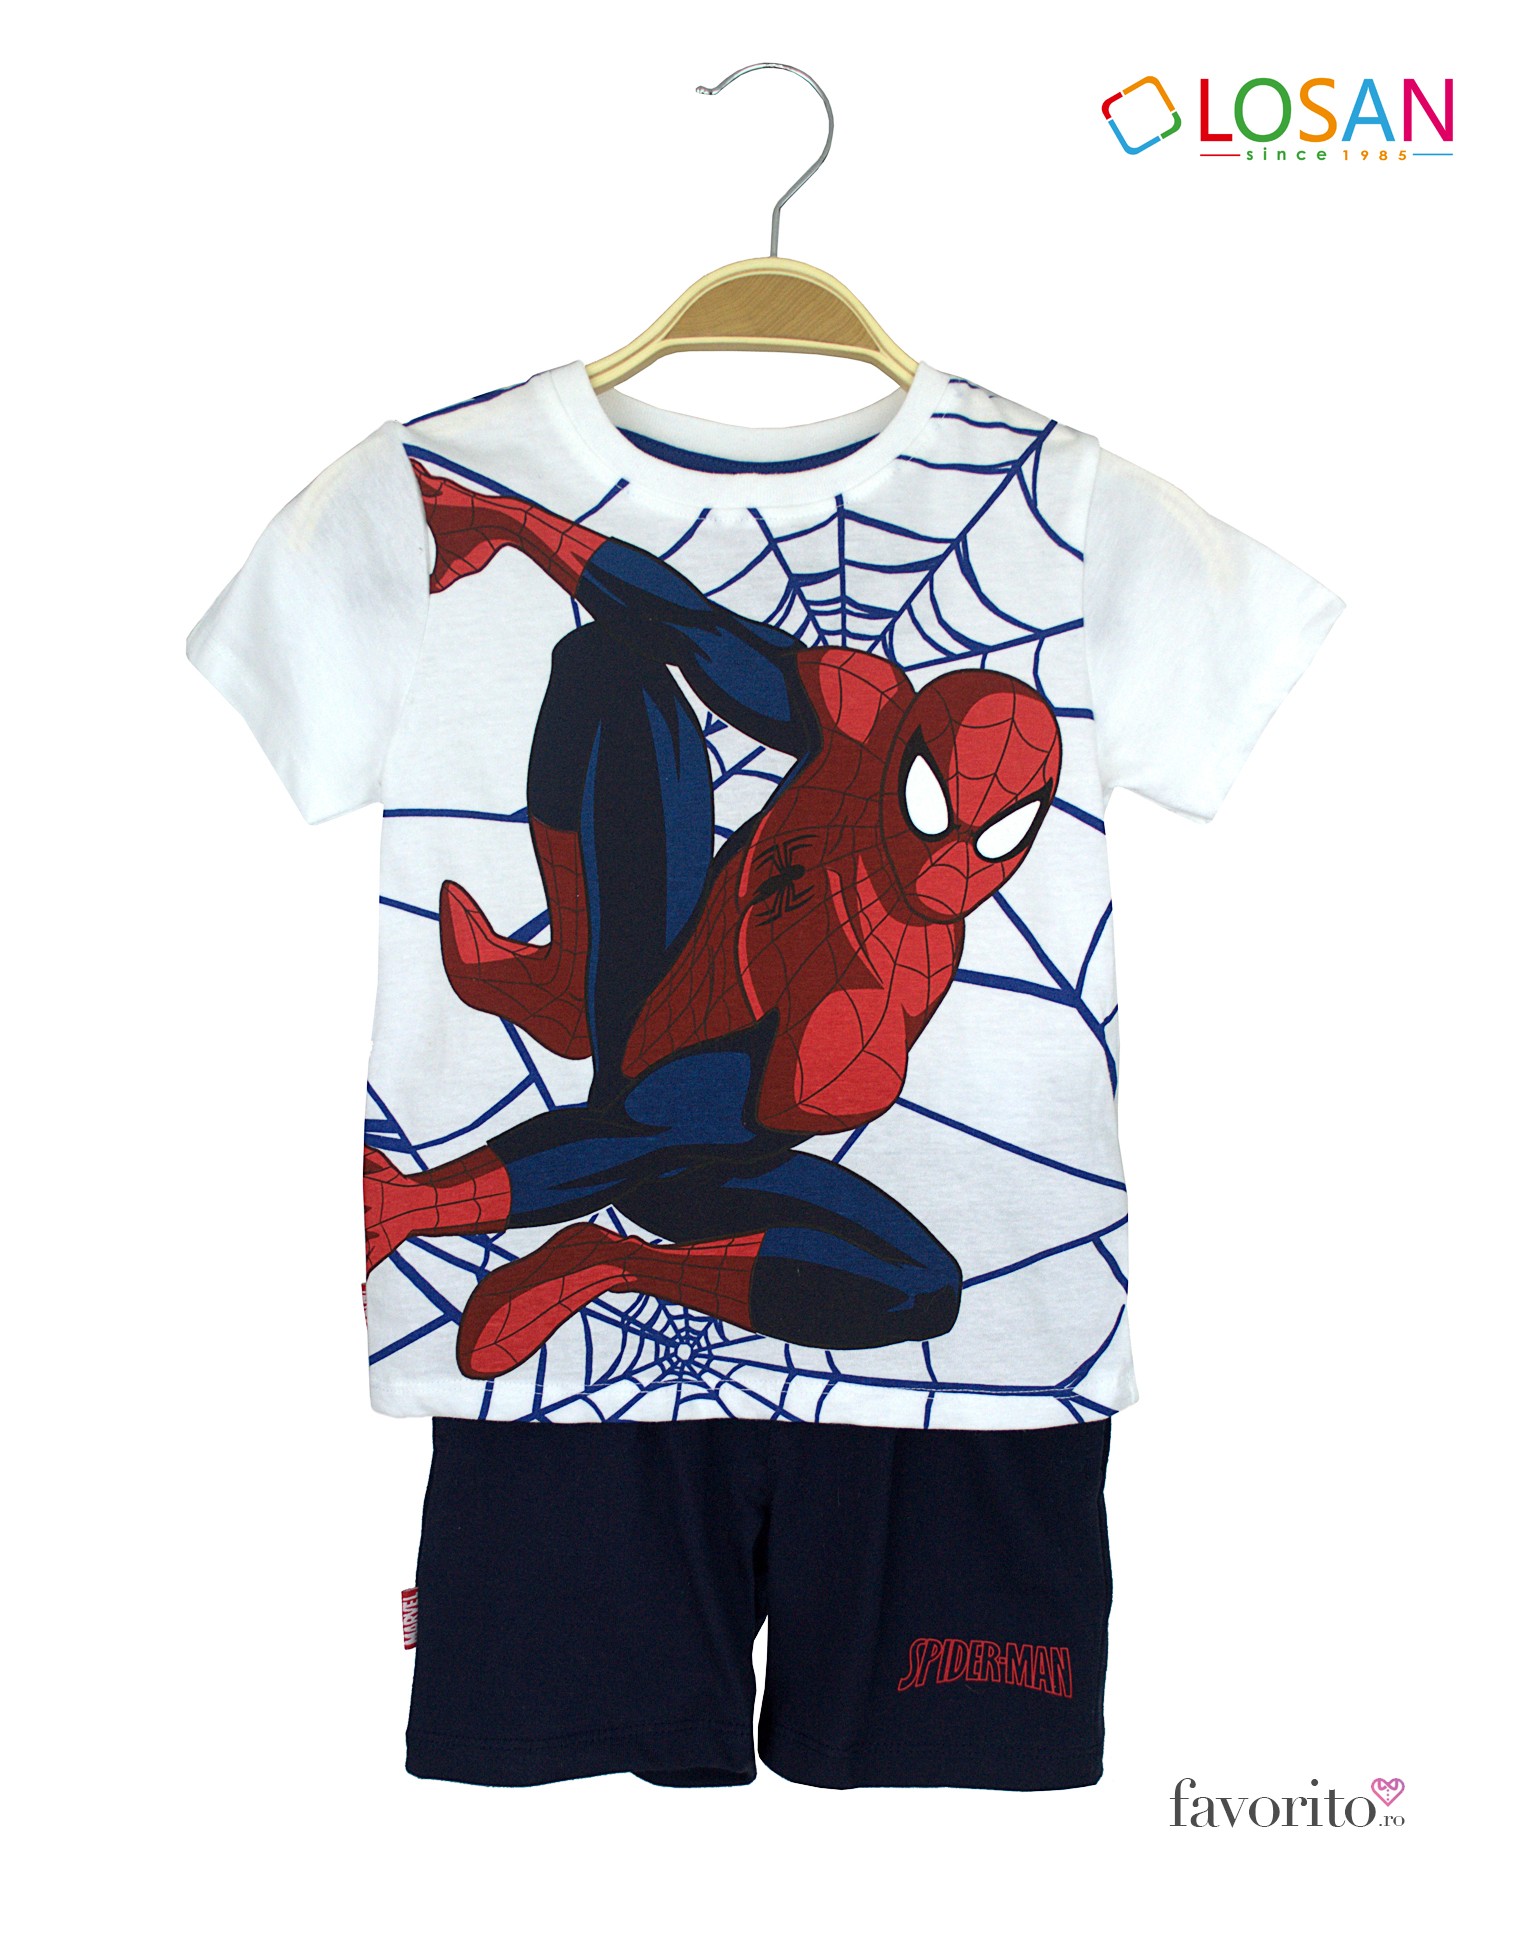 stack navigation Investigation Set MARVEL baieti, tricou si bermude, Spiderman,LOSAN (2-7 ani) – Favorito